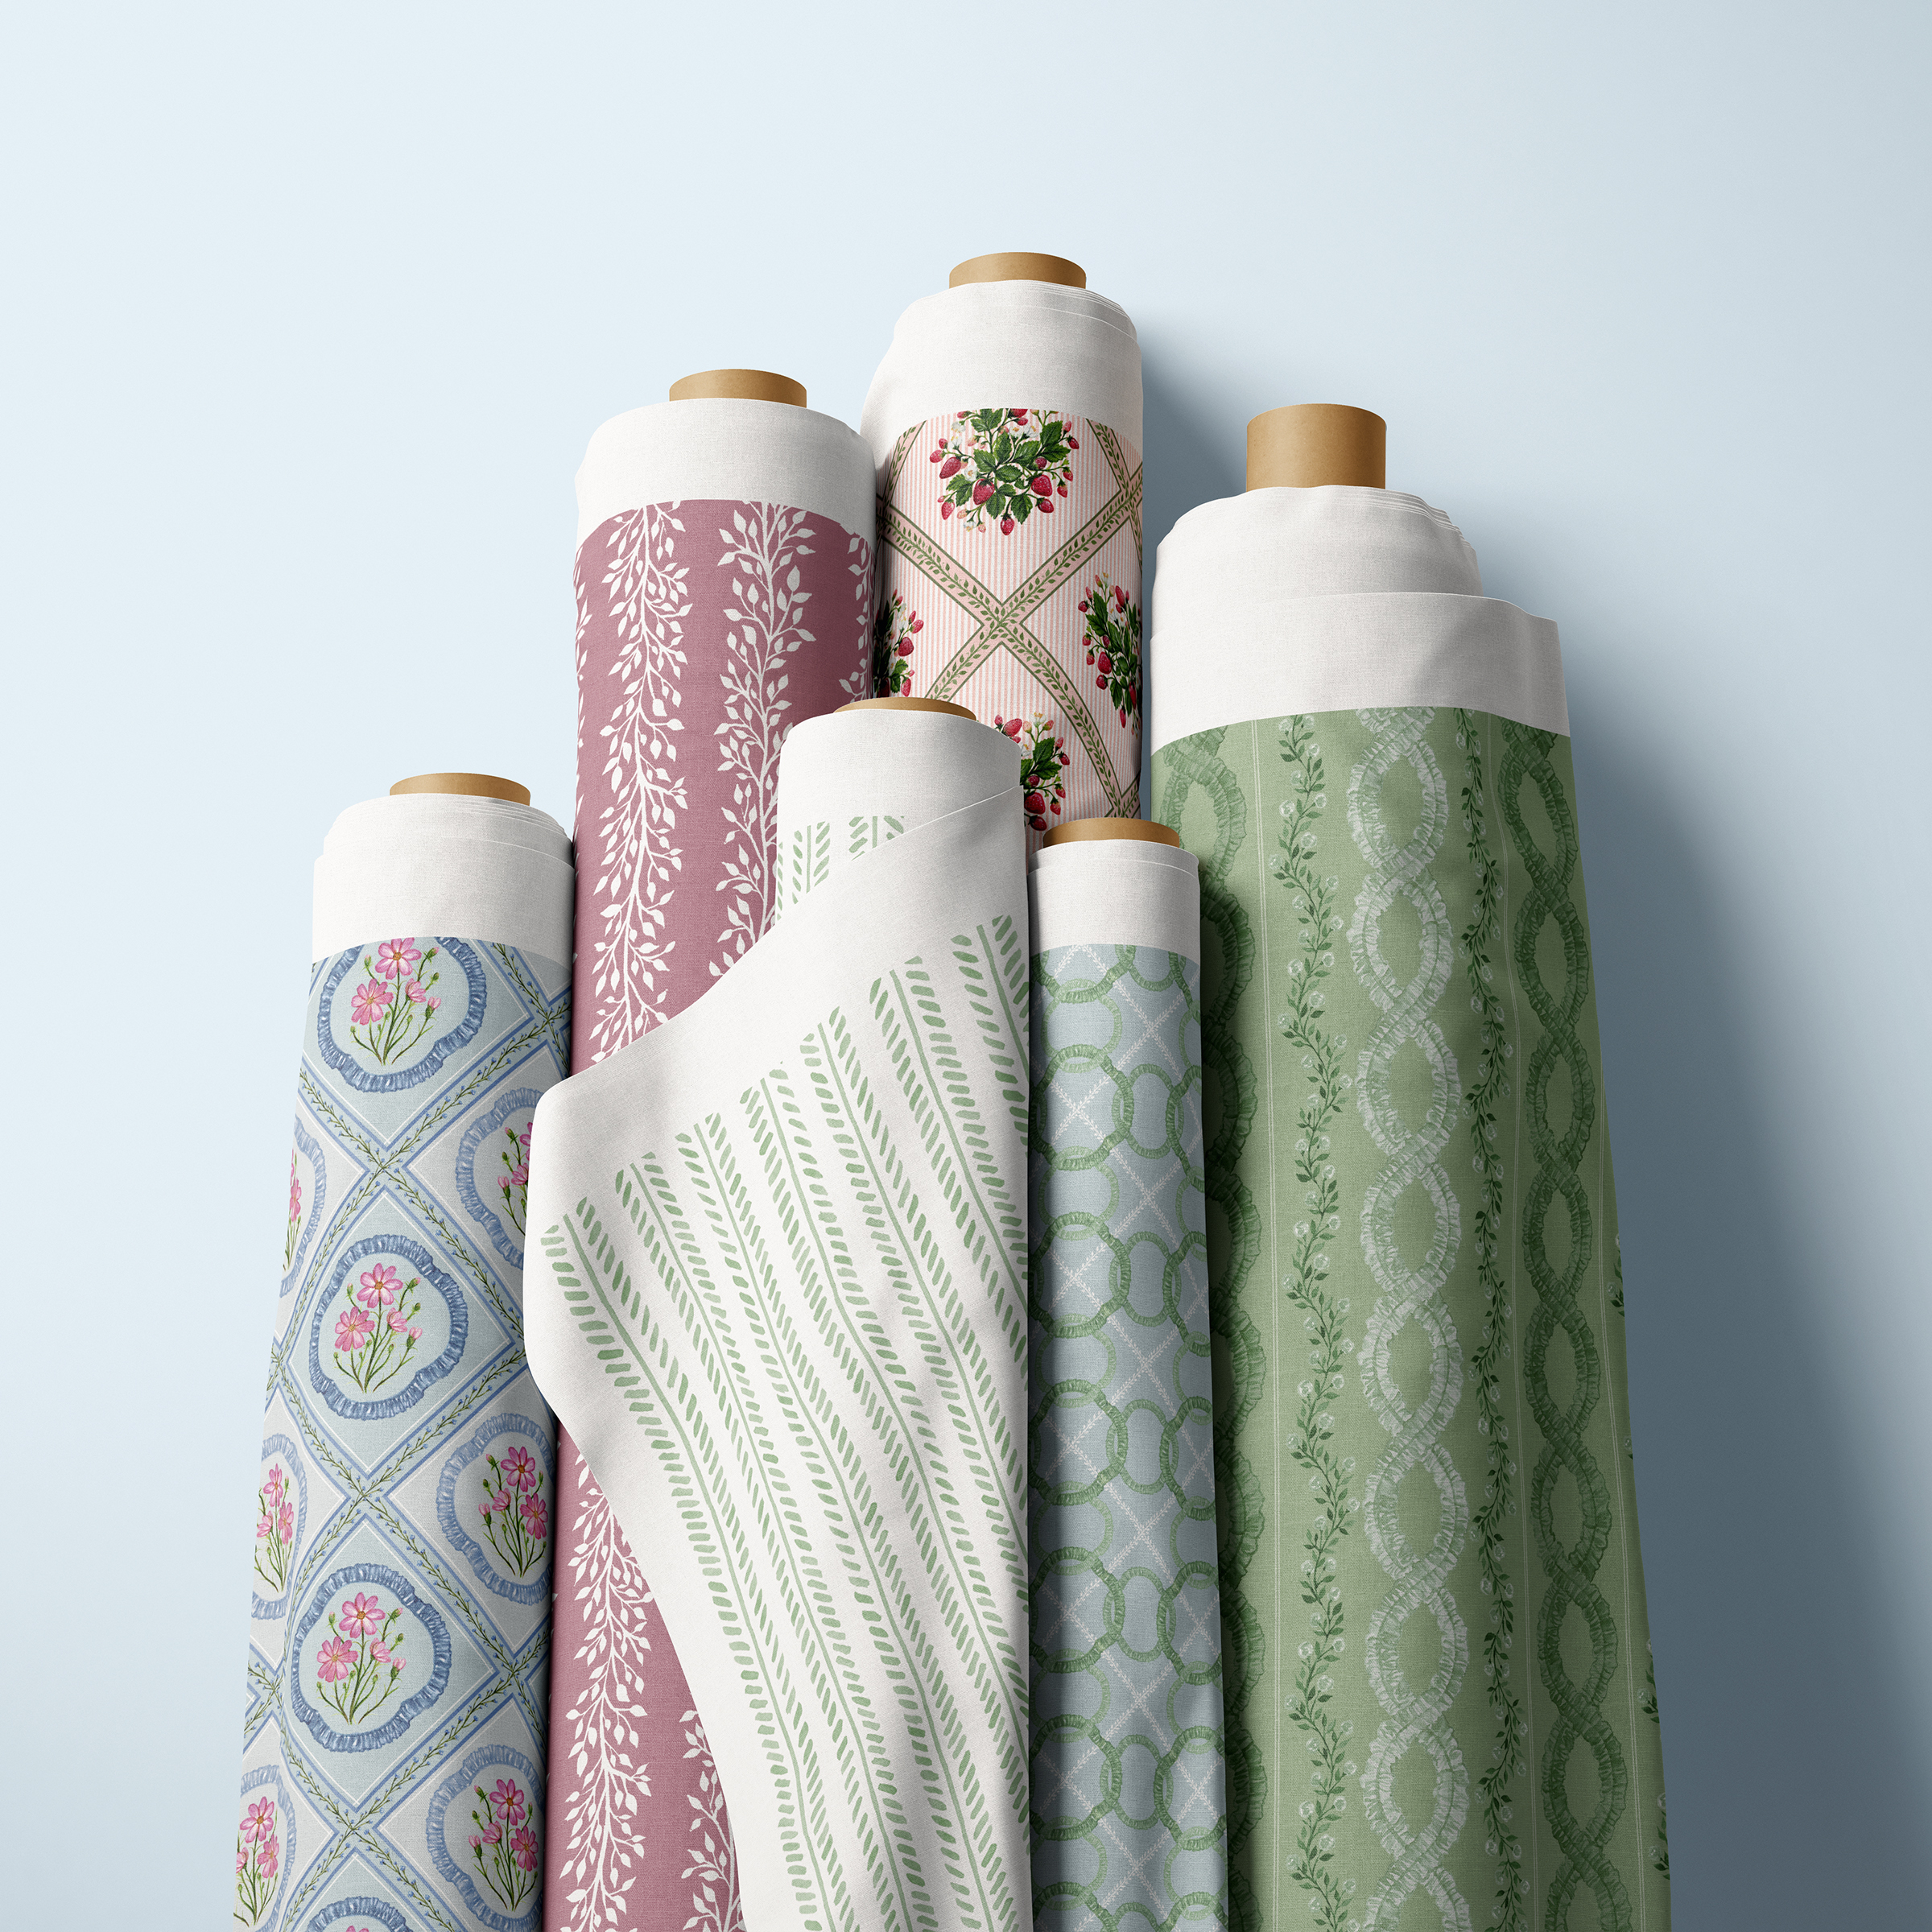 Fabric Designs by Joanna Baker